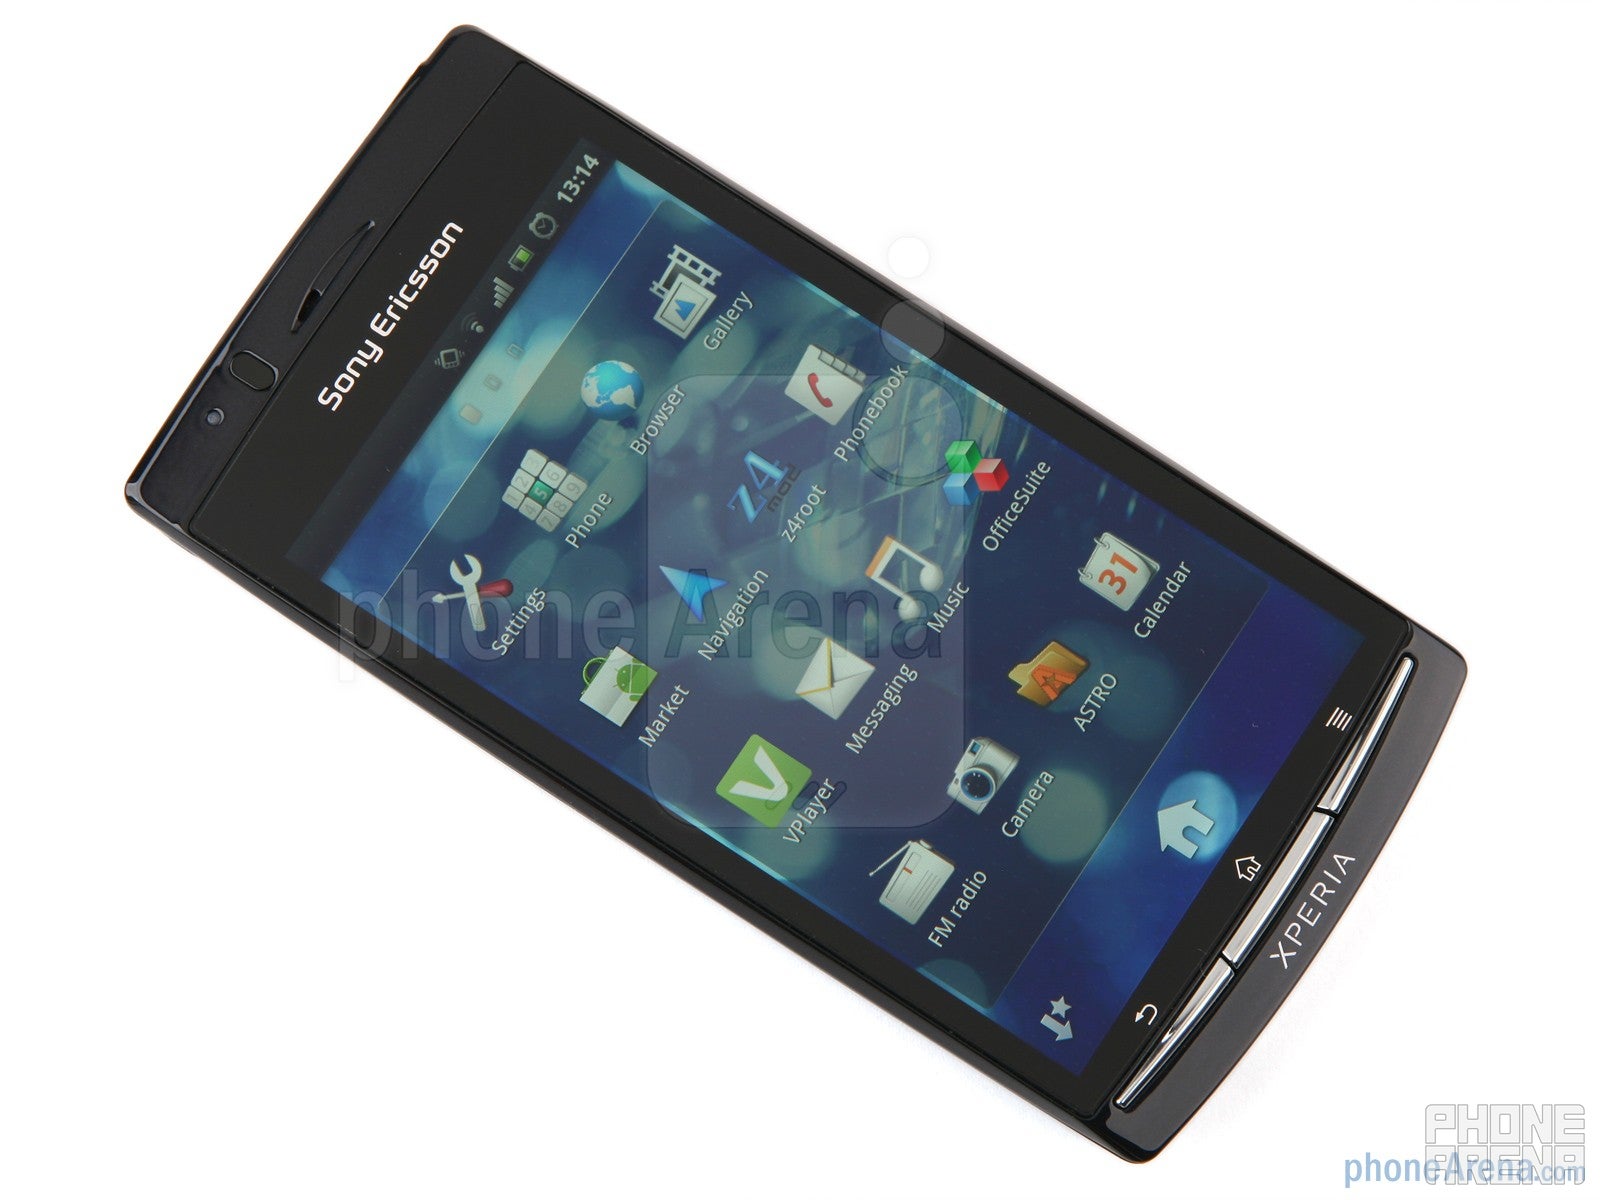 Sony Ericsson Xperia arc Review